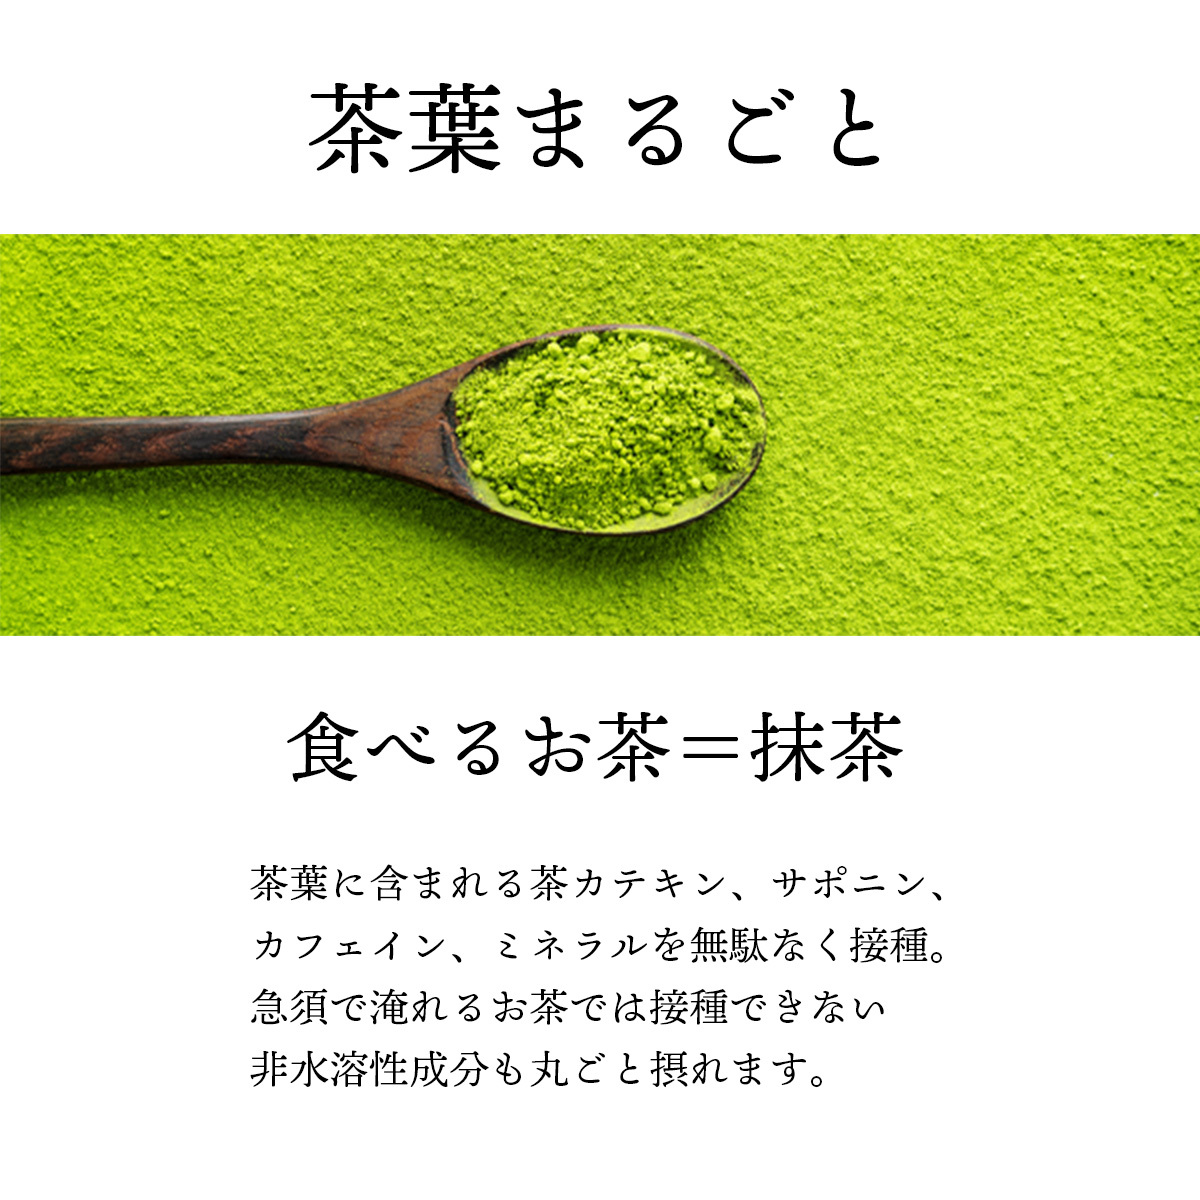  powdered green tea 100g 2 piece set Kagoshima prefecture production powdered green tea 100%